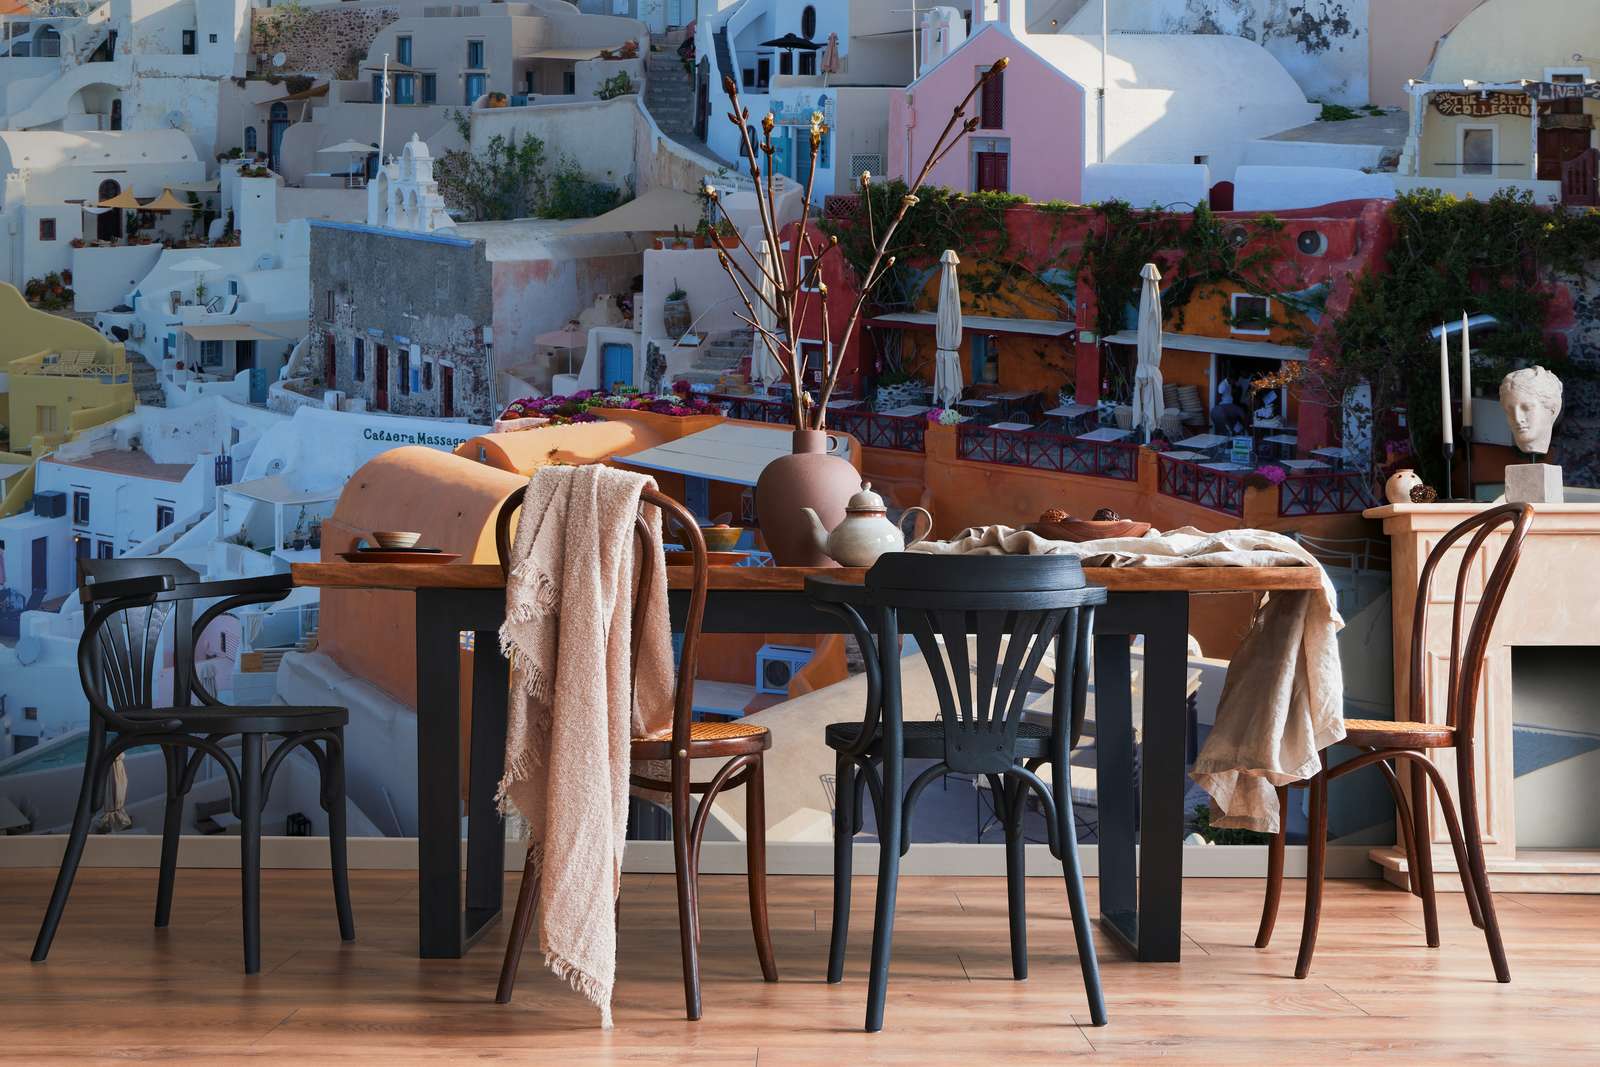             Photo wallpaper Houses of Santorini - Premium smooth fleece
        